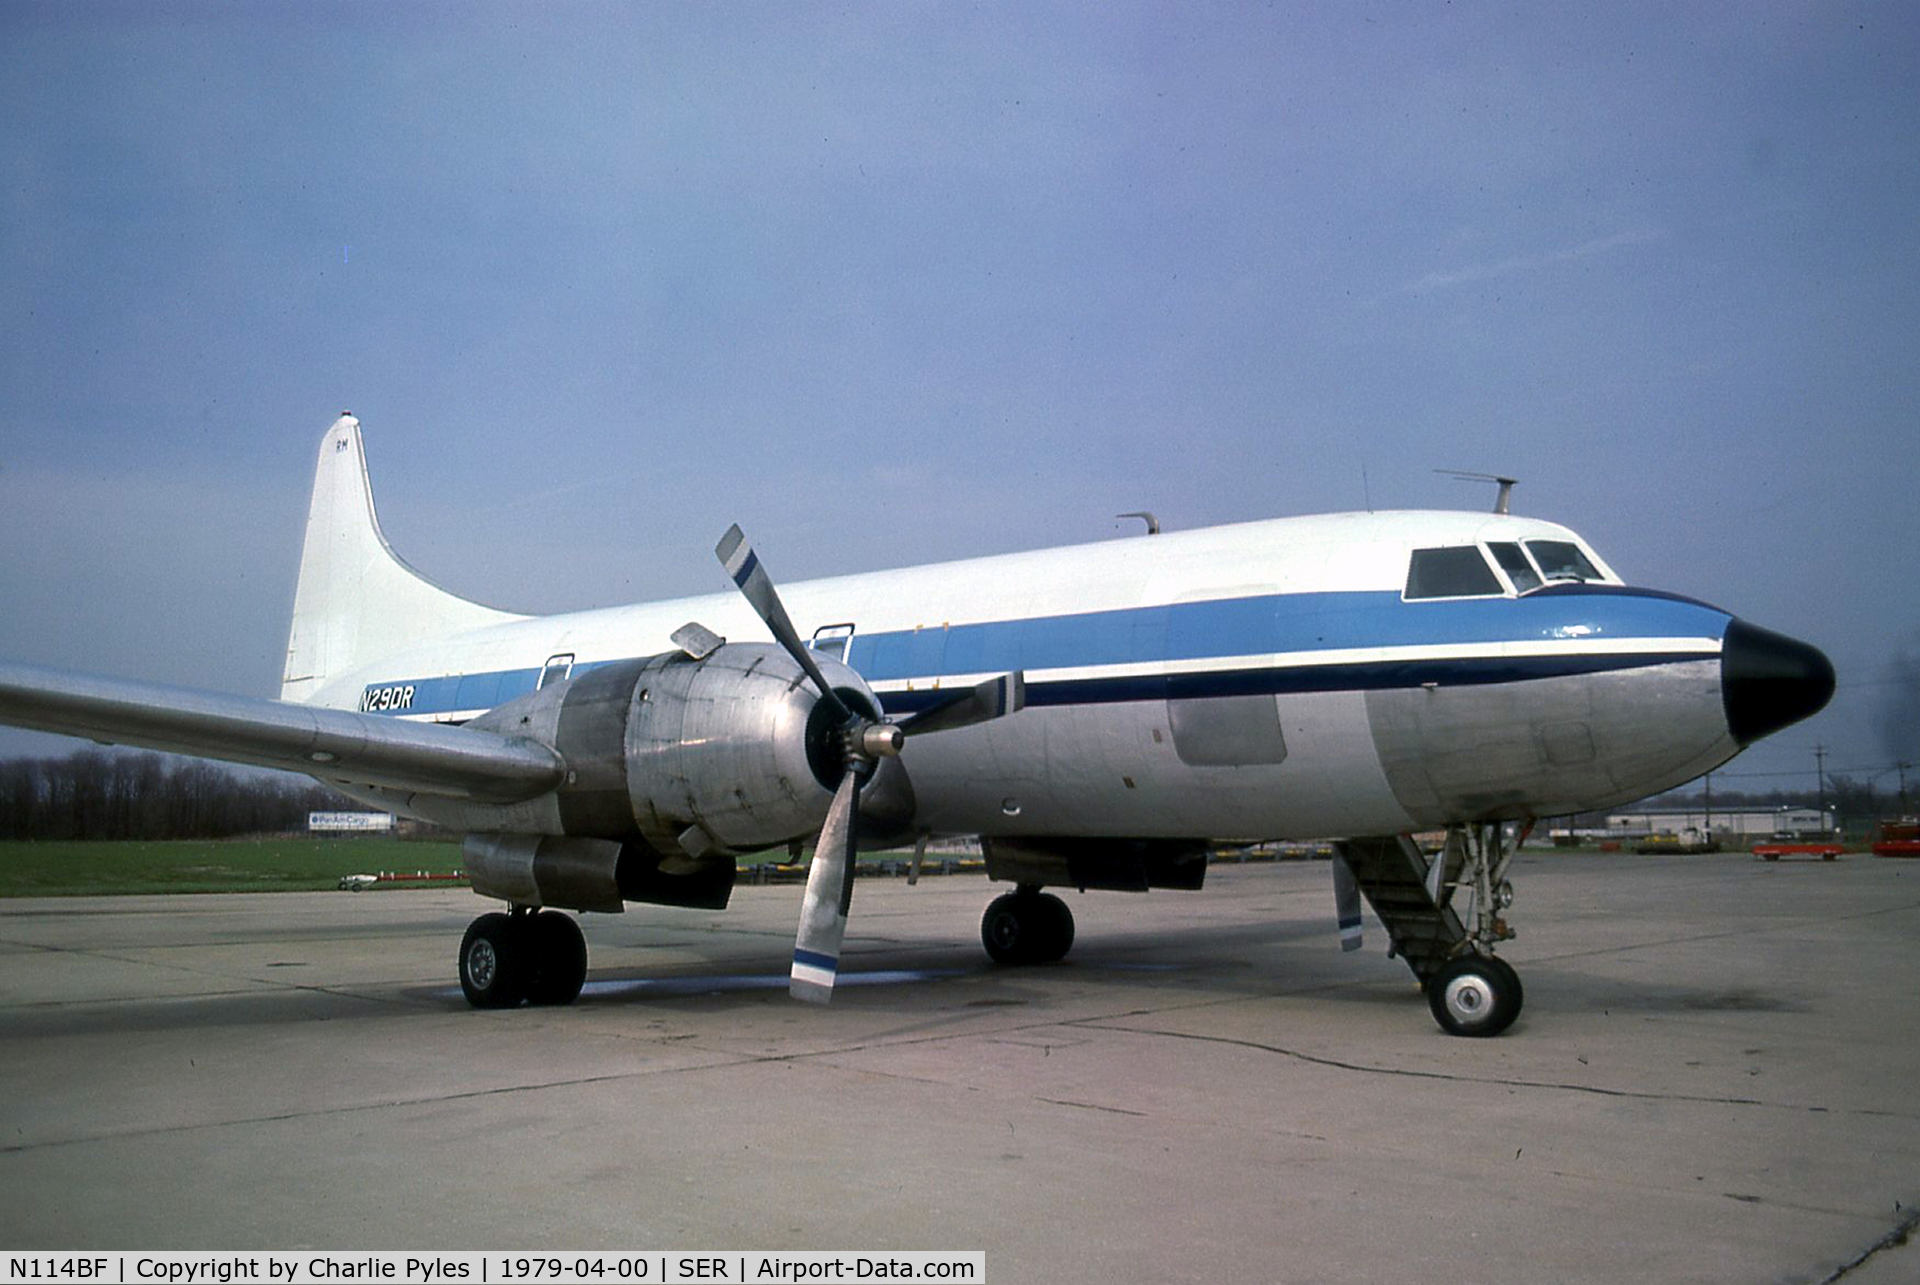 N114BF, 1955 Convair 340 C/N 146, Seen here as N29DR at Rhoades 146      340-51                 XA-KIM     SE-CRM
CONV.    440                    SE-CRM     N29DR      N114BF     [MUSEUM]